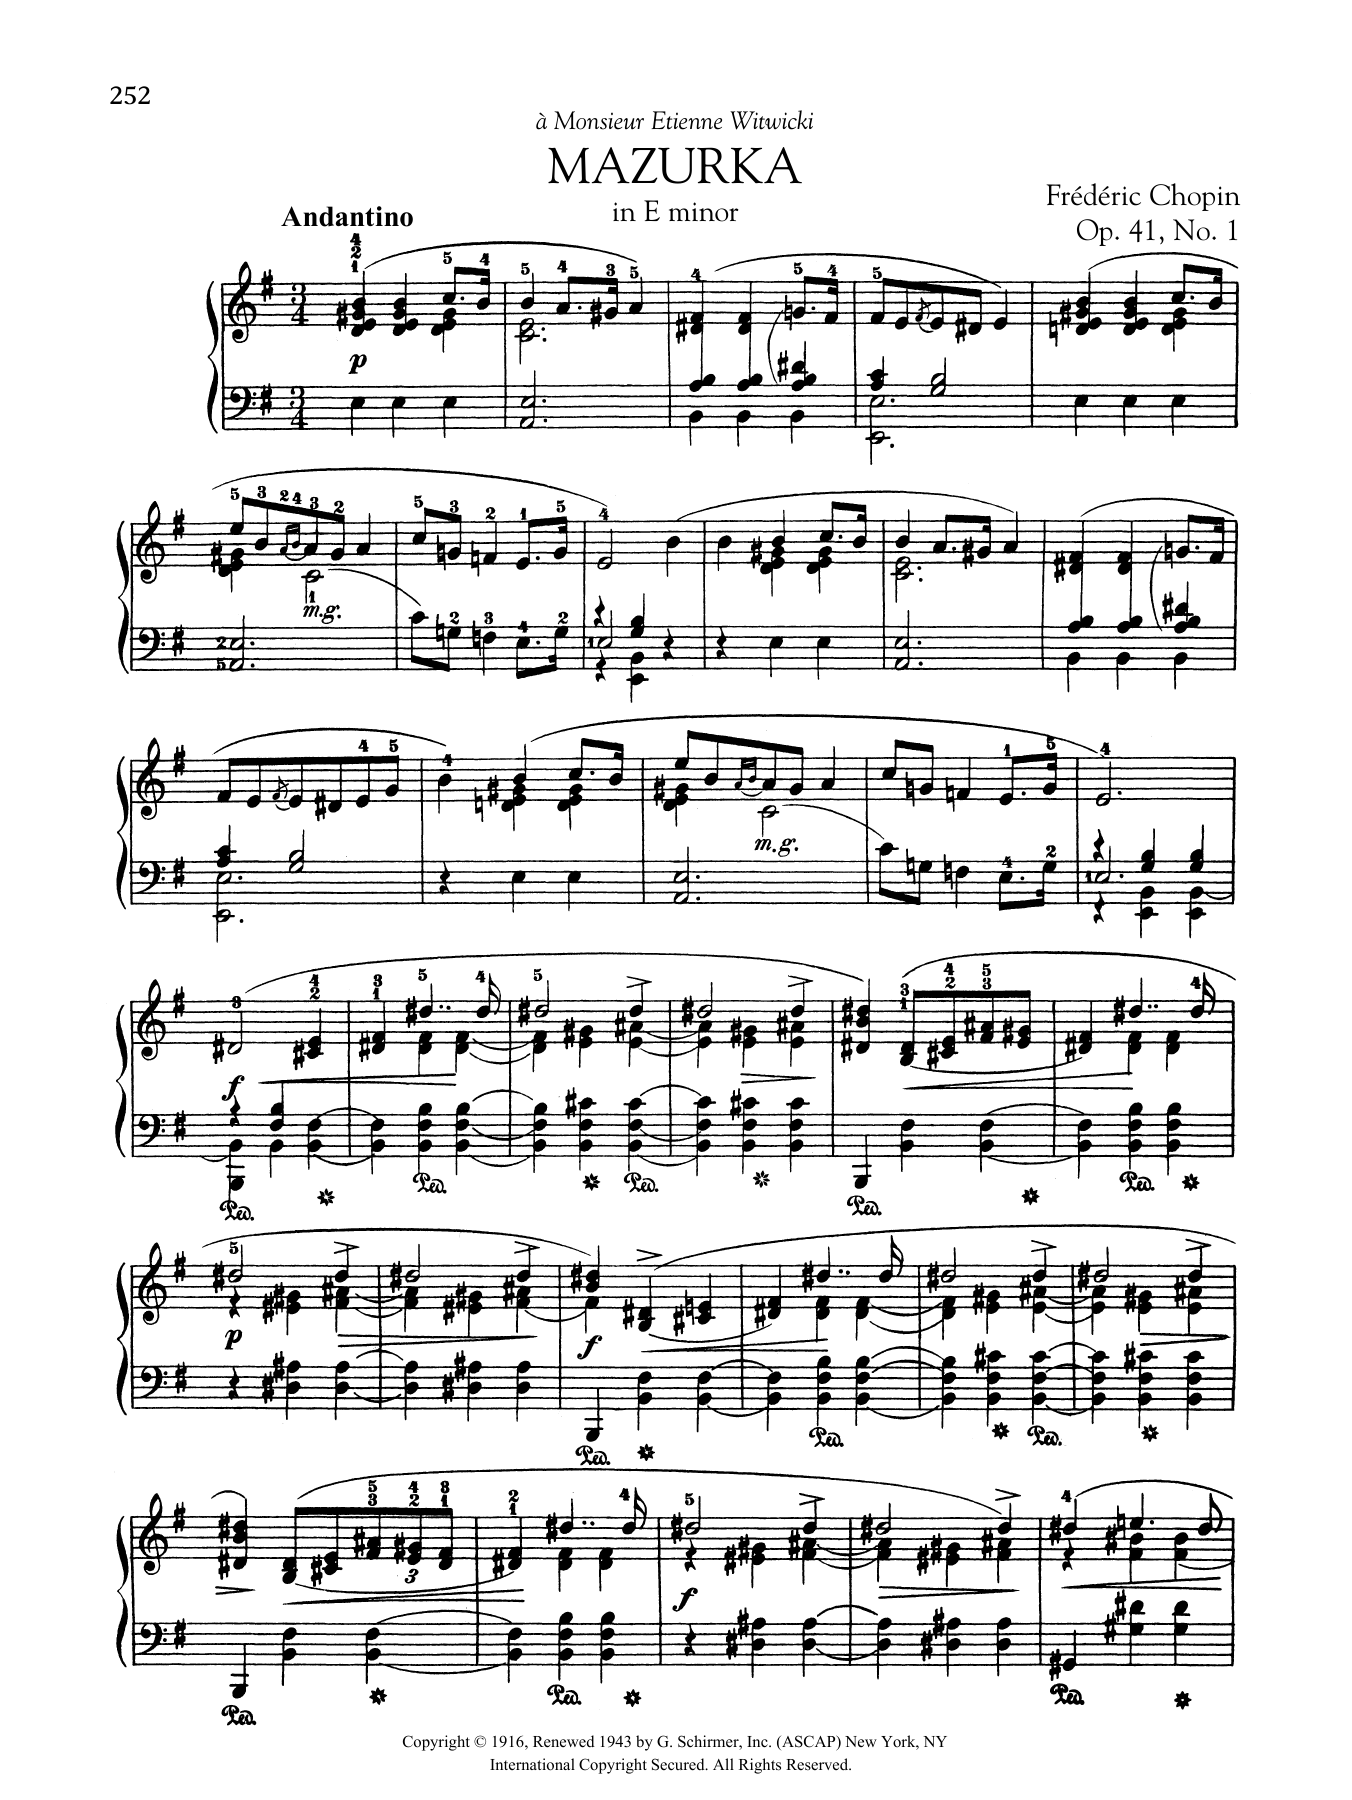 Mazurka in E minor, Op. 41, No. 1 sheet music